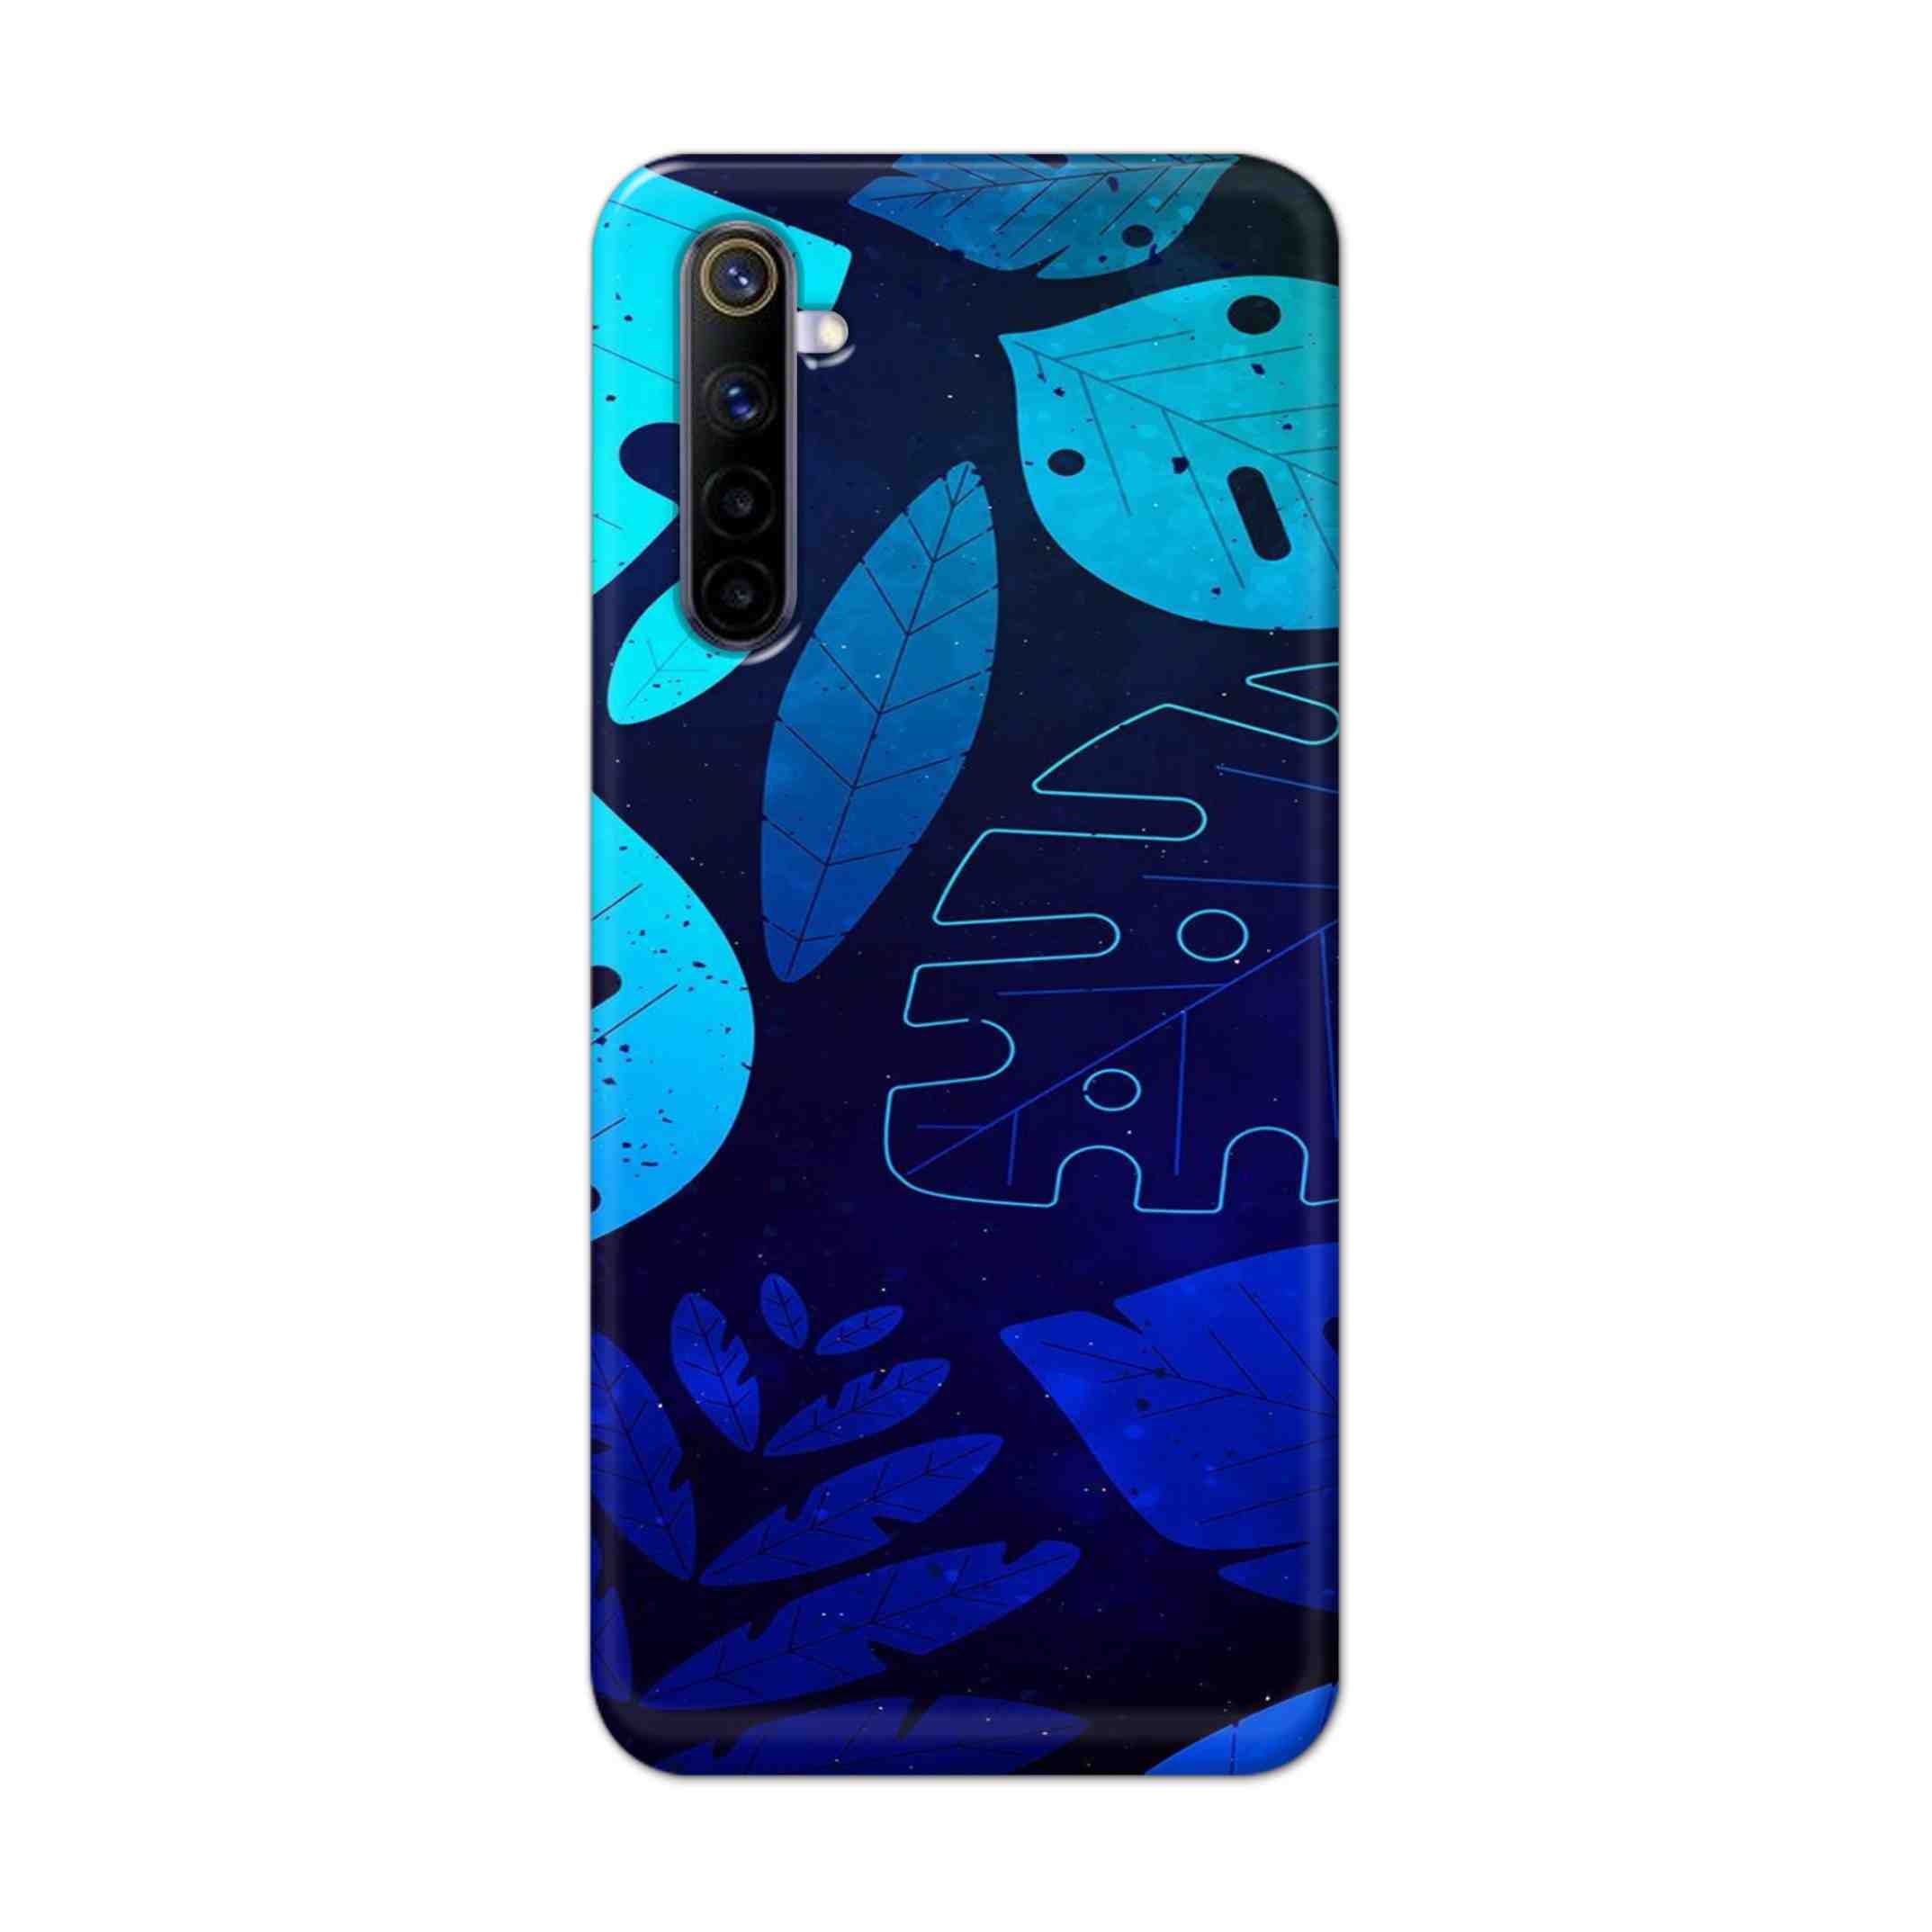 Buy Neon Leaf Hard Back Mobile Phone Case Cover For REALME 6 PRO Online